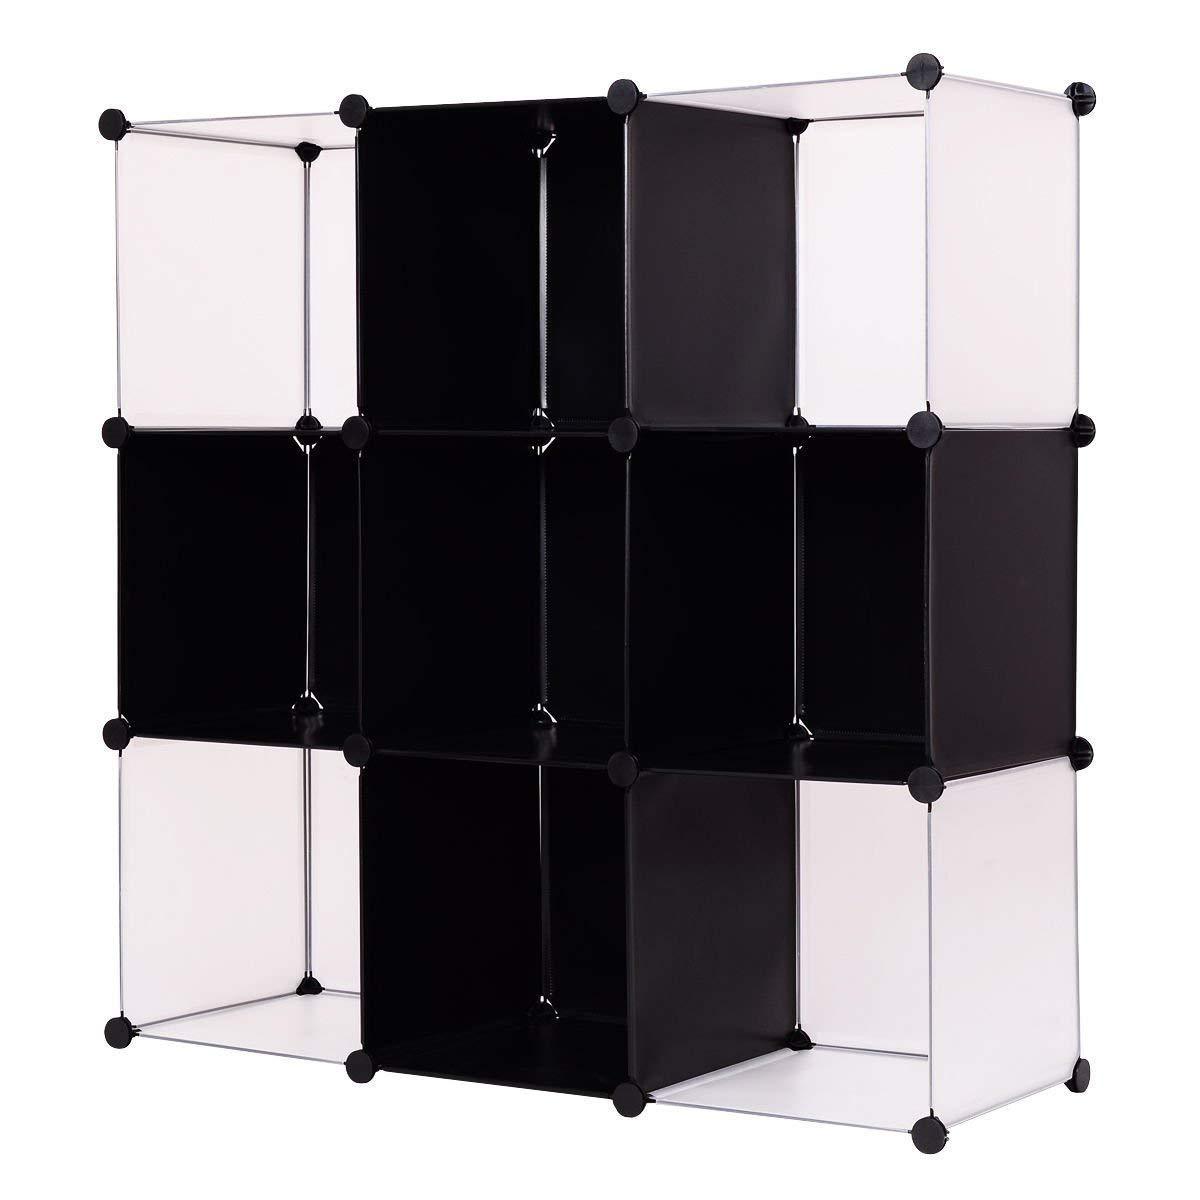 Cheap tangkula cube storage organizer 9 cube bookshelf diy plastic closet cabinet modular bookcase storage shelving for bedroom living room office 43 5l x 14 6 w x 43 5h